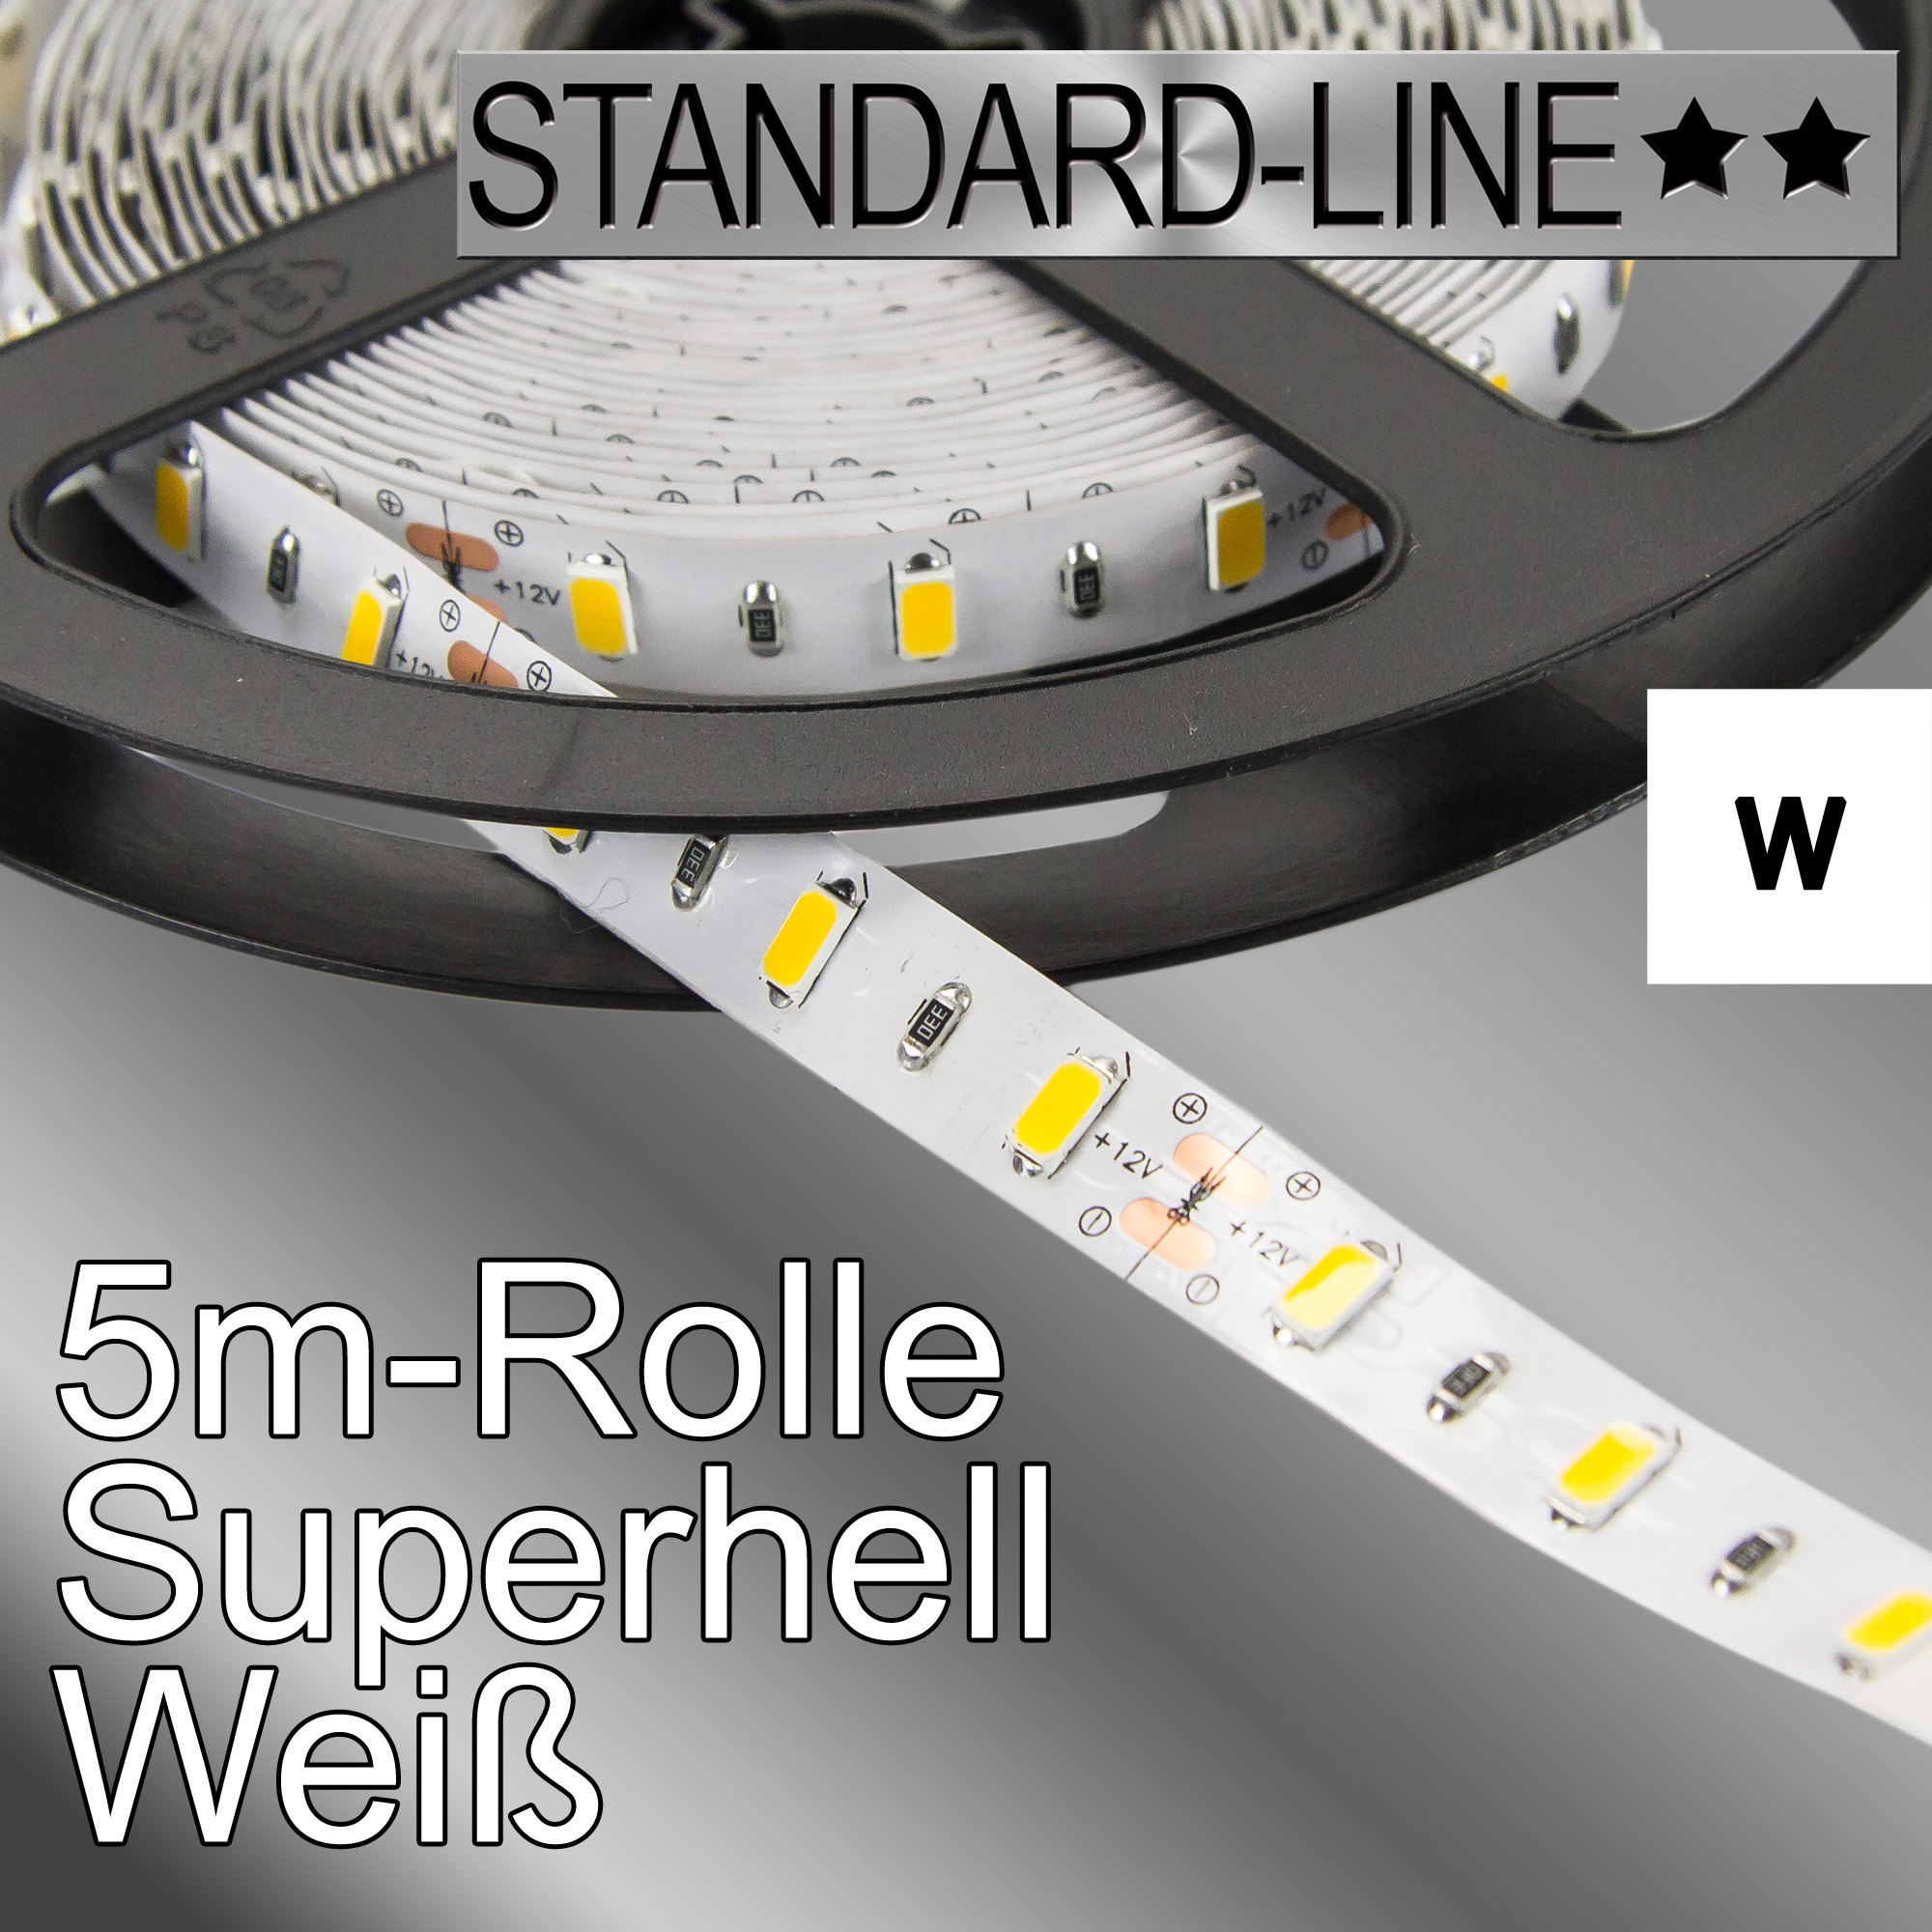 5m High-Power 12V LED-Strip SL-5730 weiß mit 12W/m, Stripes Flexband  SL-5730w, Standard-Line LED-Strips, Einfarbige LED-Strips, LED-STRIPS